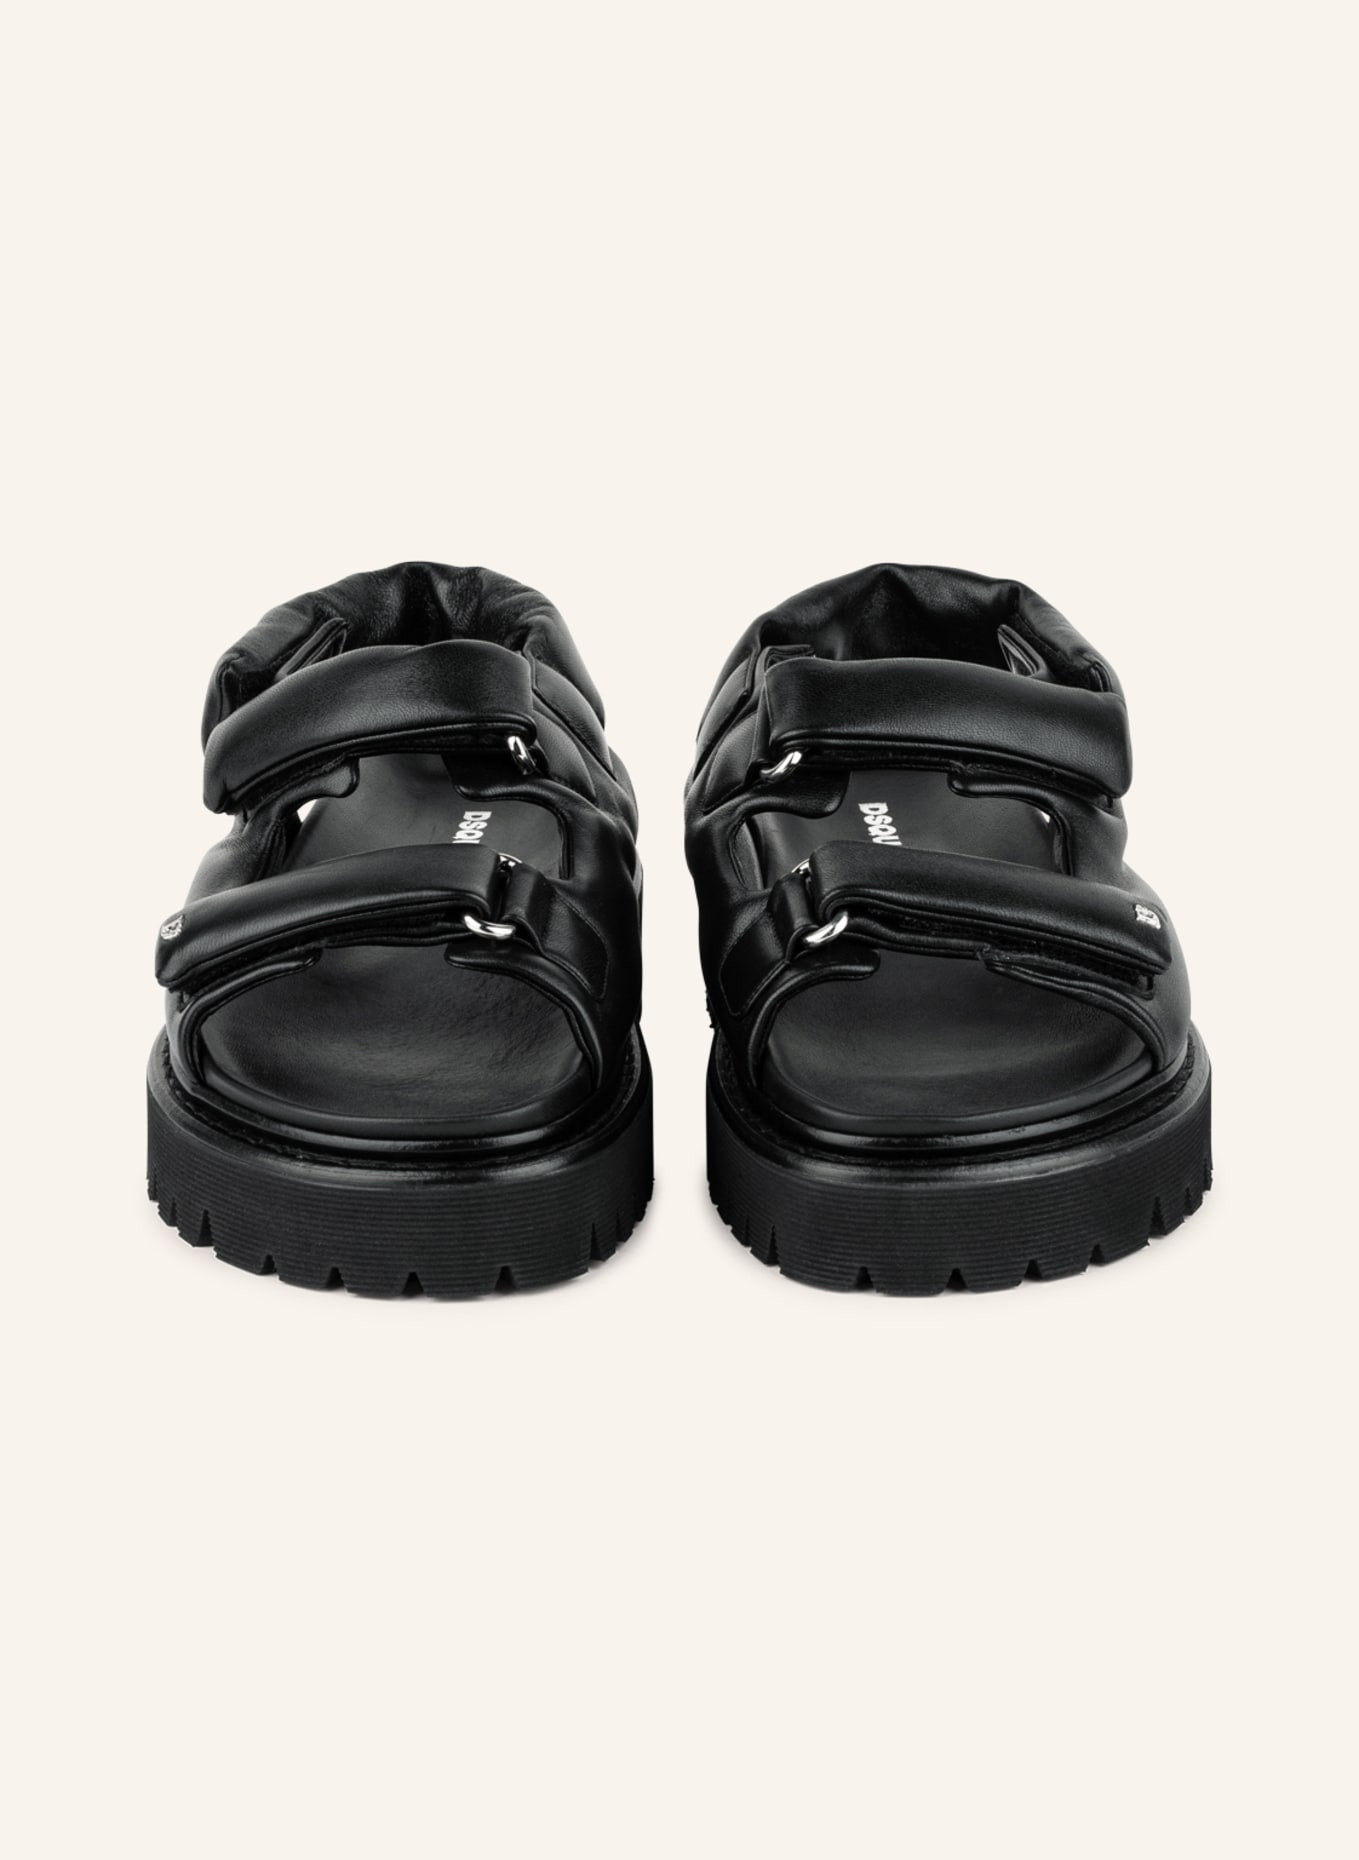 DREAM PAIRS Women's Flat Sandals for Summer, Black, 5 